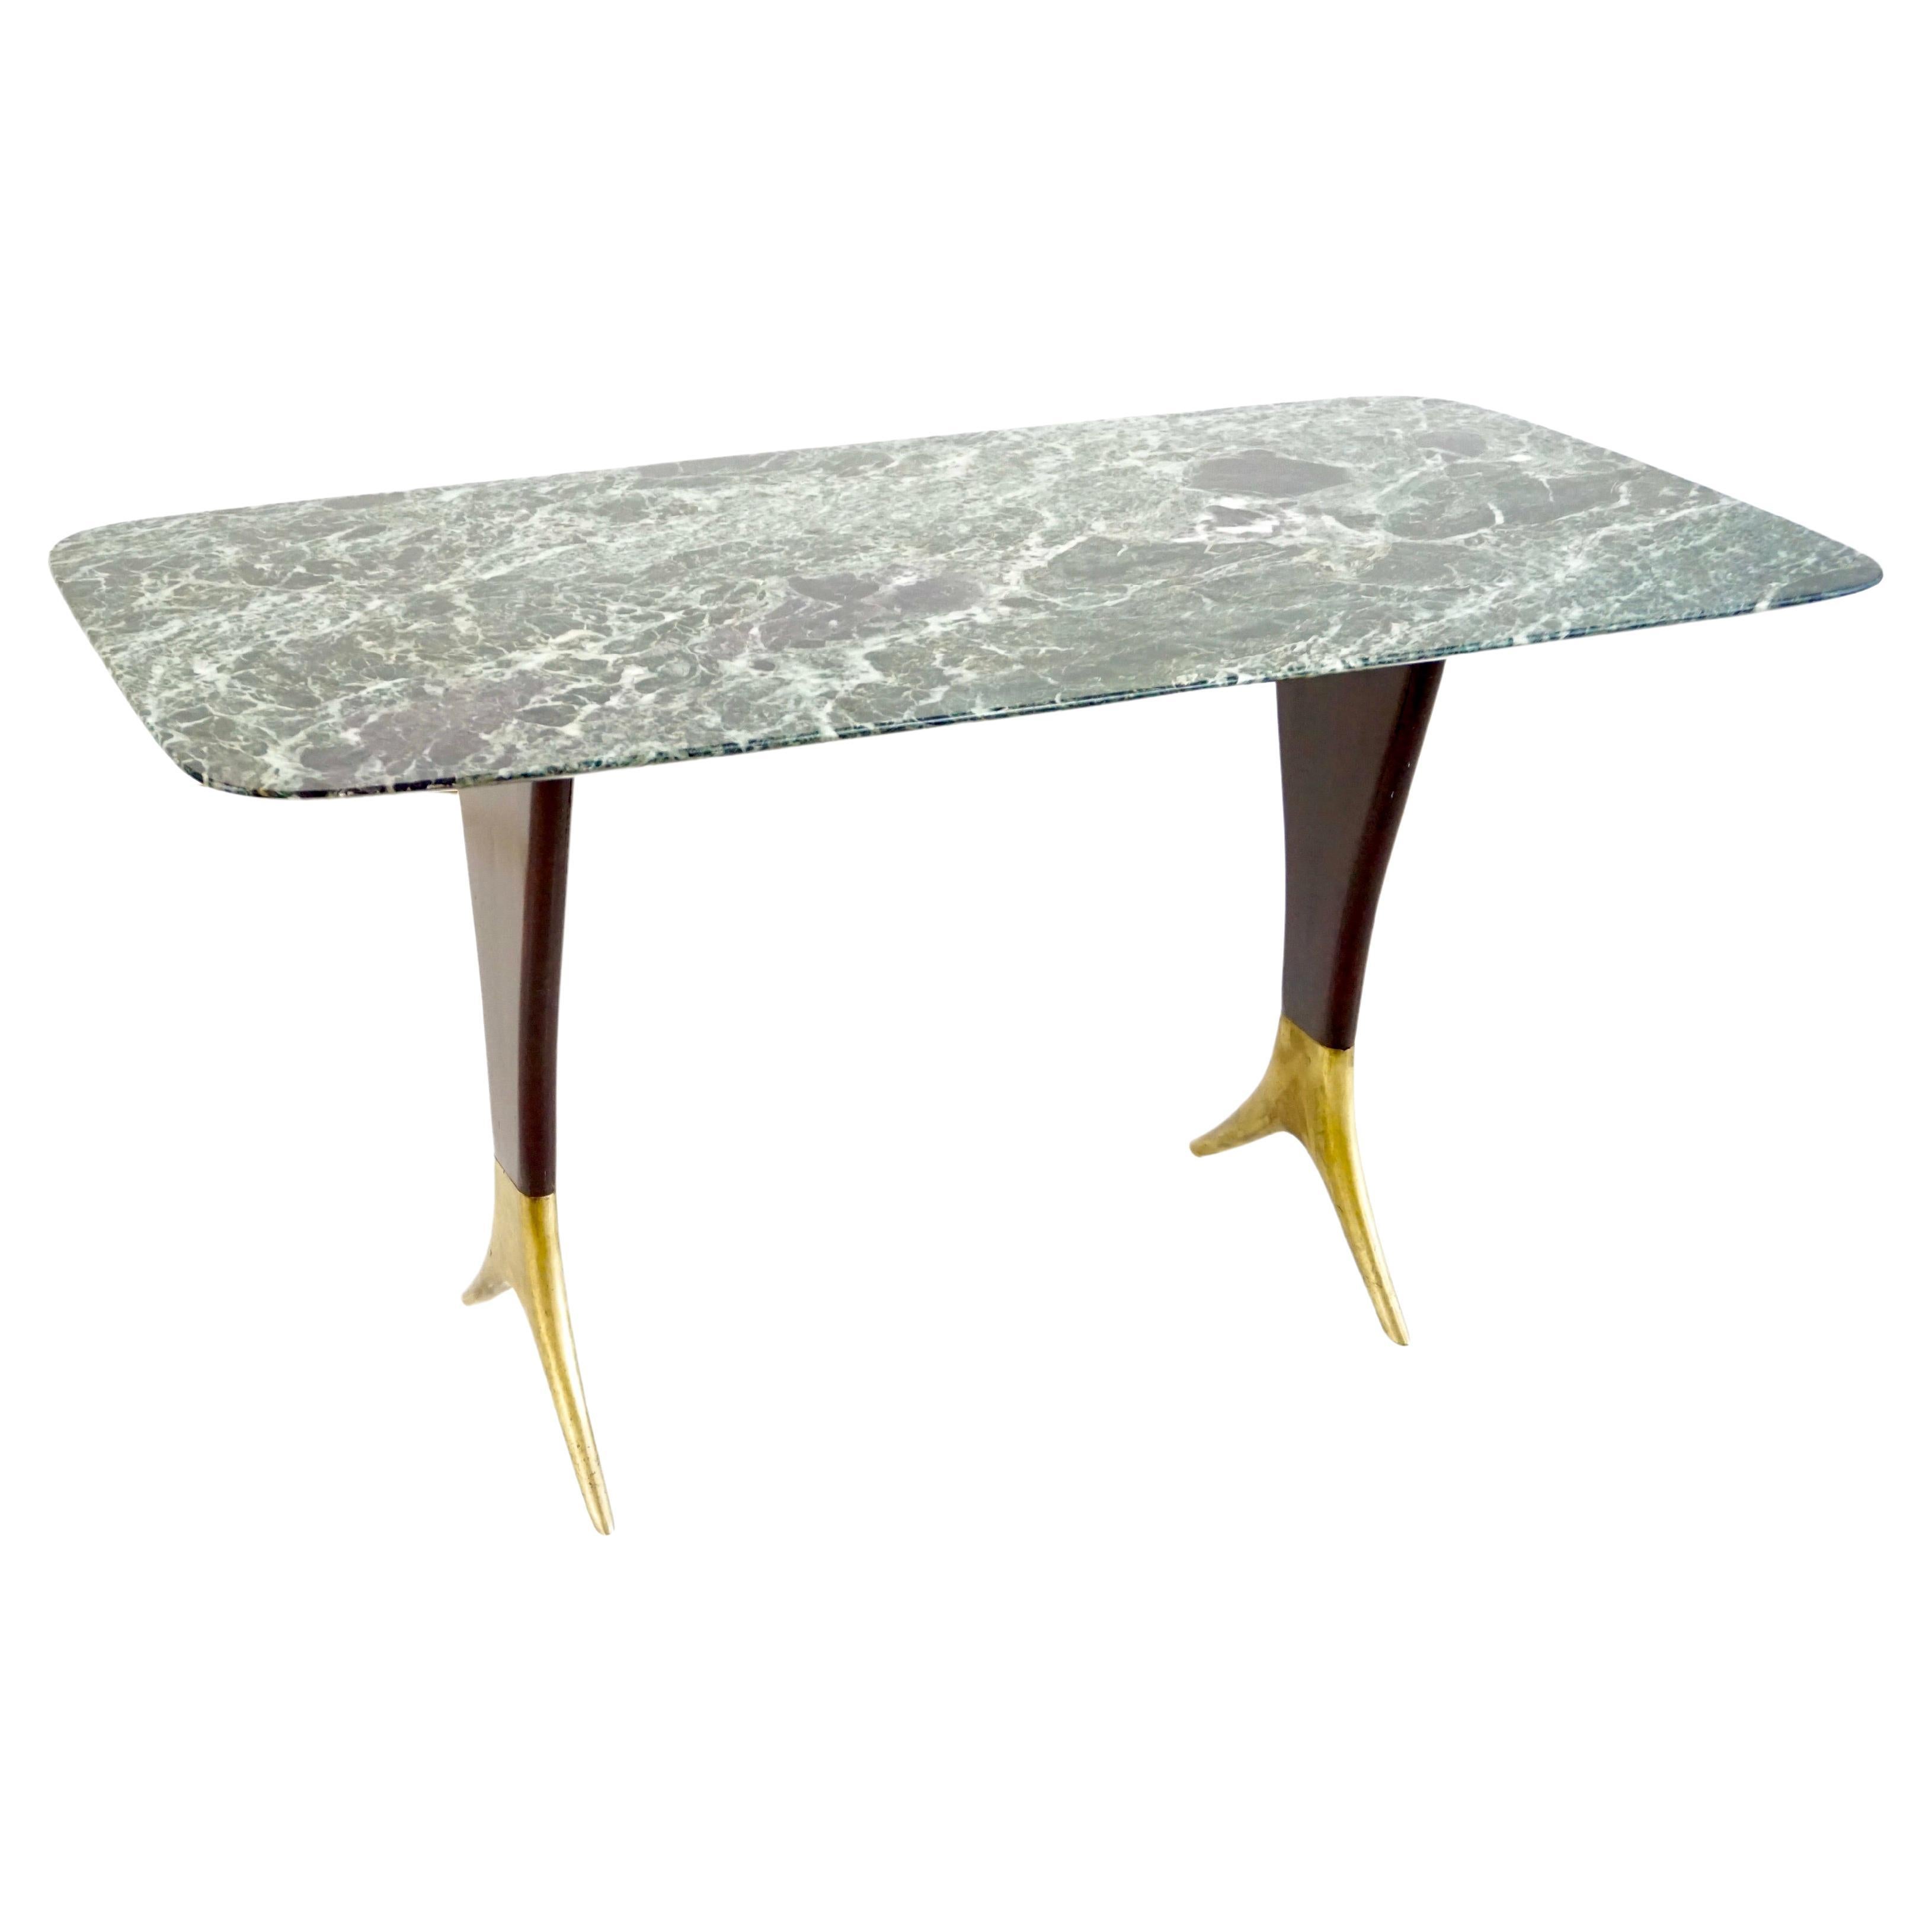 Fine Guglielmo Ulrich coffee table, verde alpi marble top, brass feet,  1940 For Sale